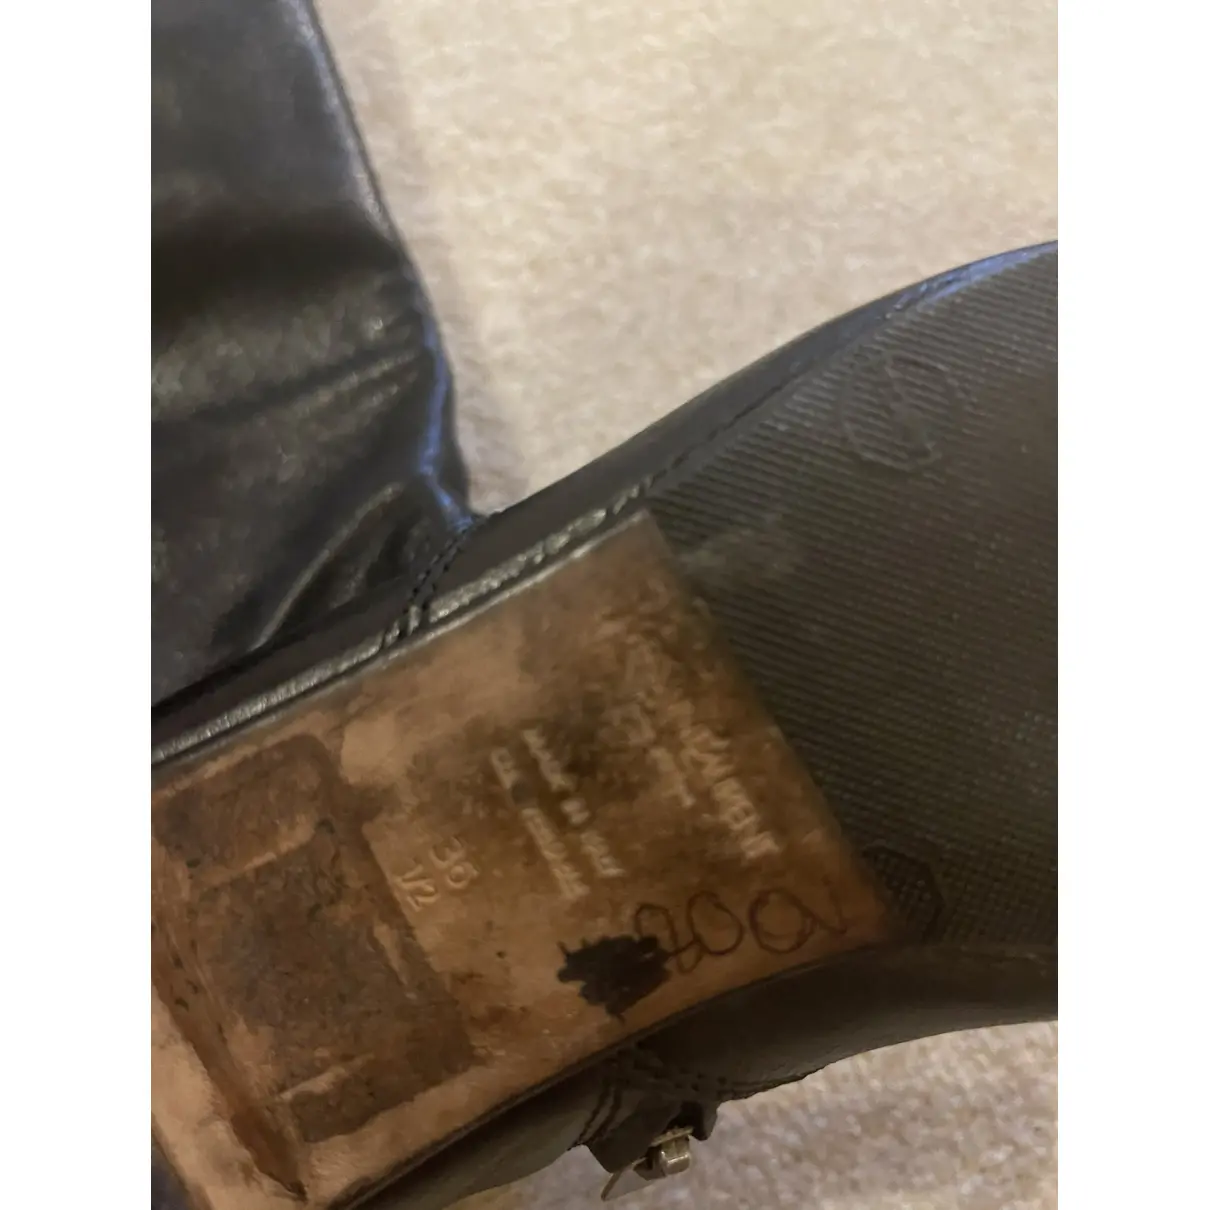 Leather ankle boots Yves Saint Laurent - Vintage